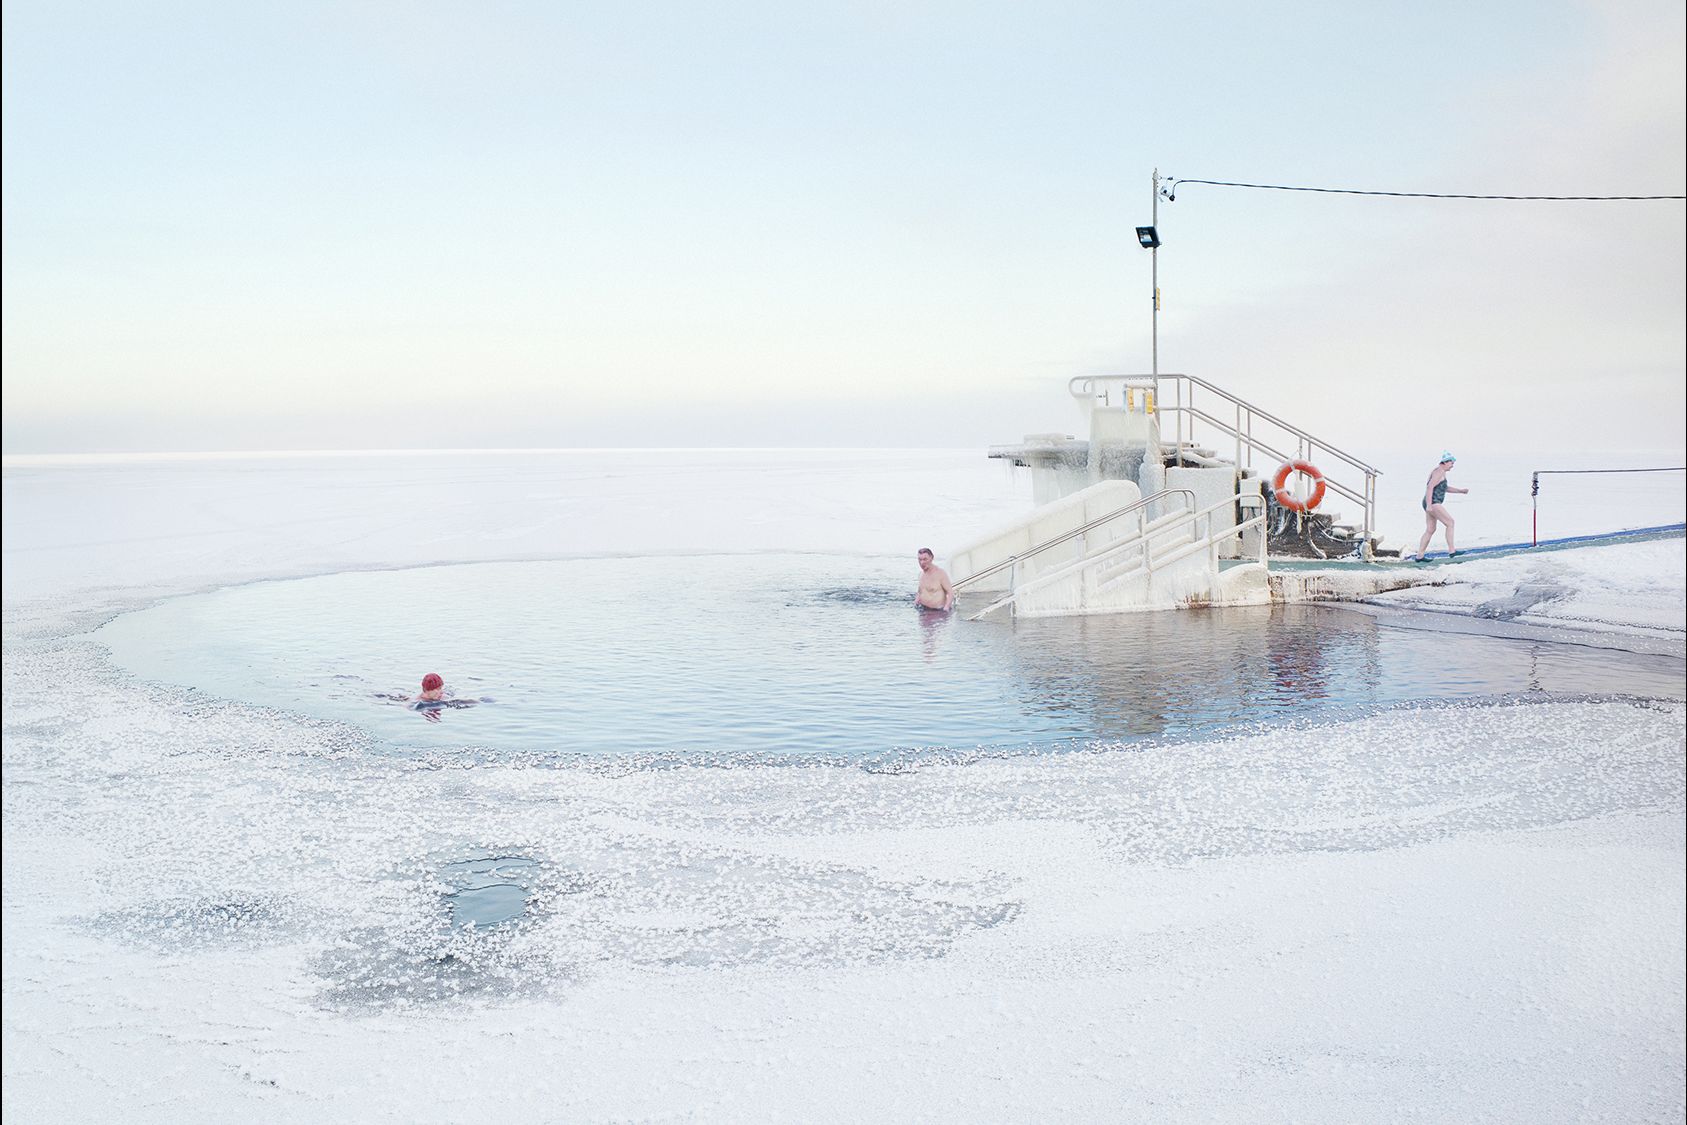 Winter swimming: Capturing the avanto ritual in Finland (photos) | CNN